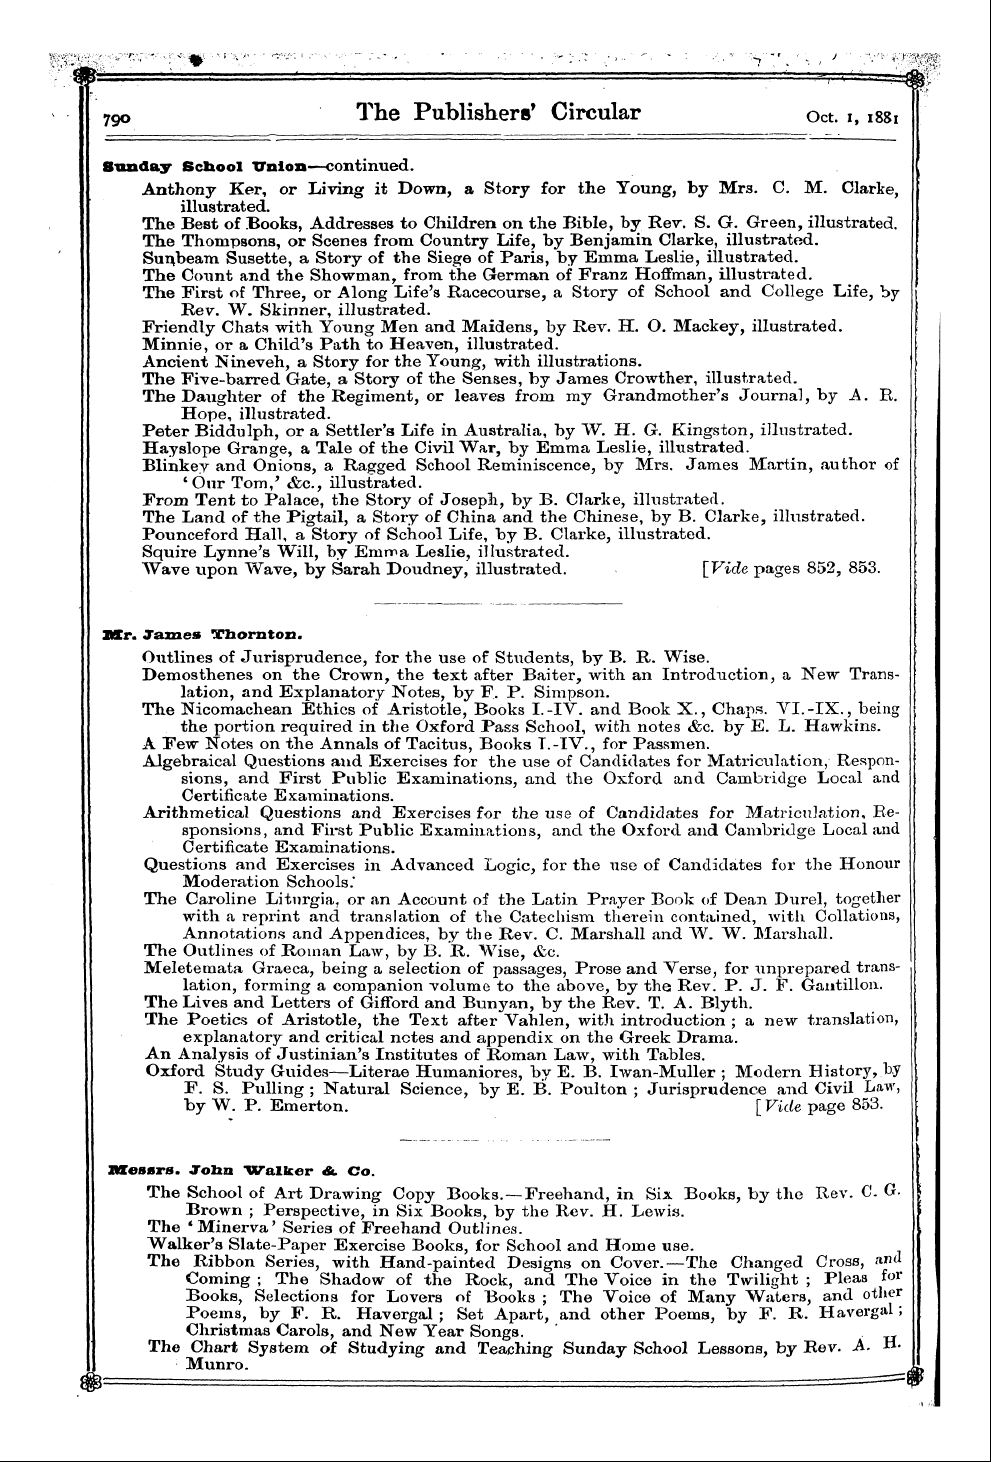 Publishers’ Circular (1880-1890): jS F Y, 1st edition - Bcr. James Thornton.